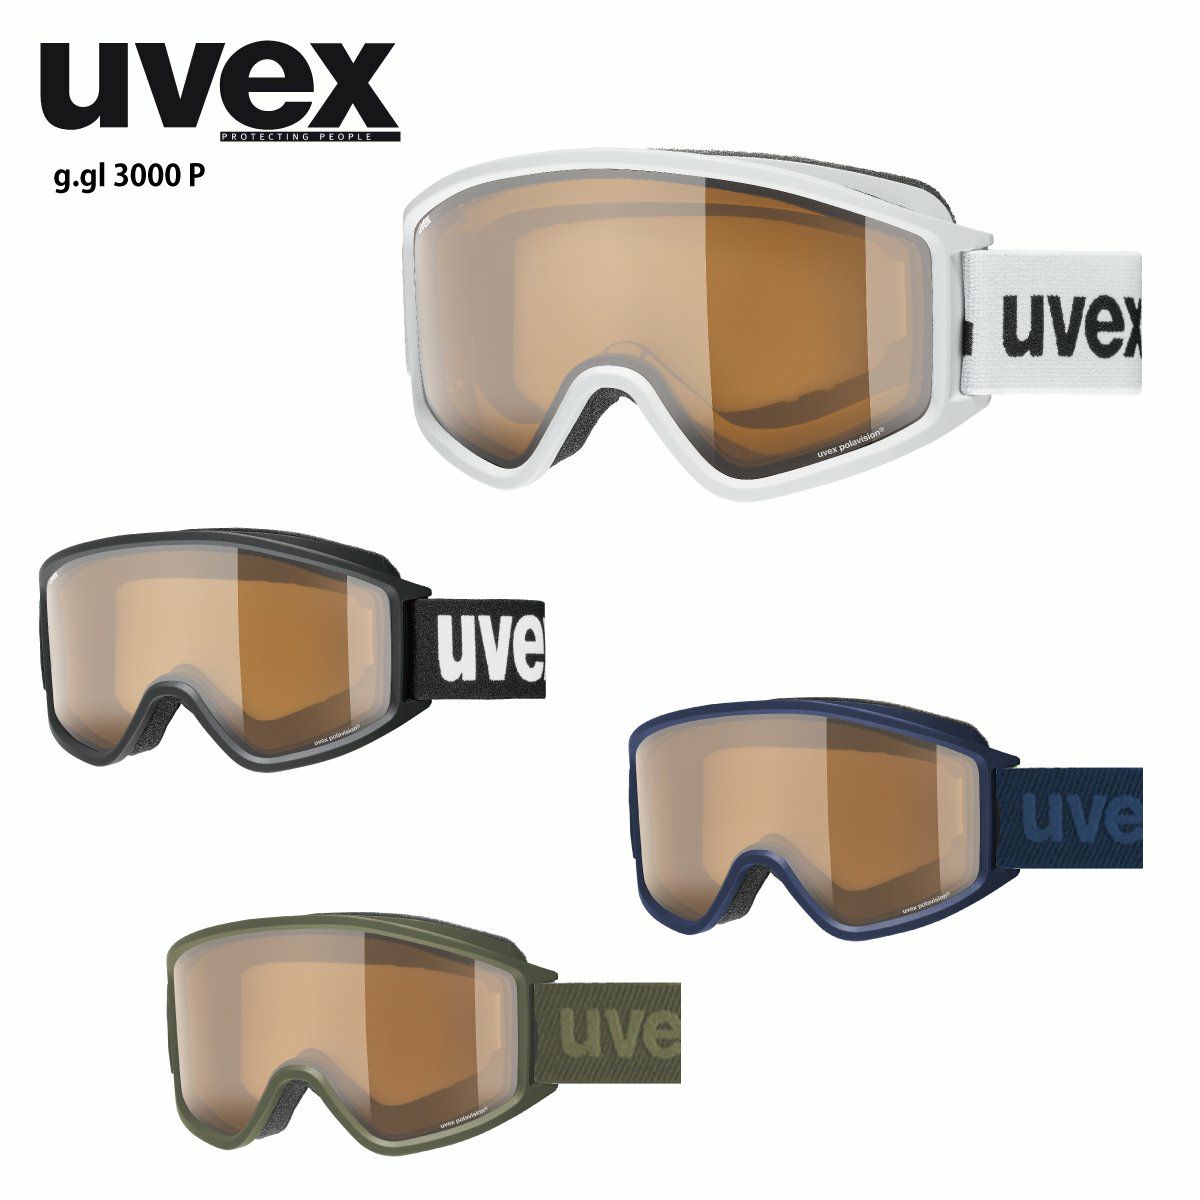 uvex(ウベックス) スキースノーボードゴーグル ユニセックス ハイコントラストミラー シングルレンズ contest CV